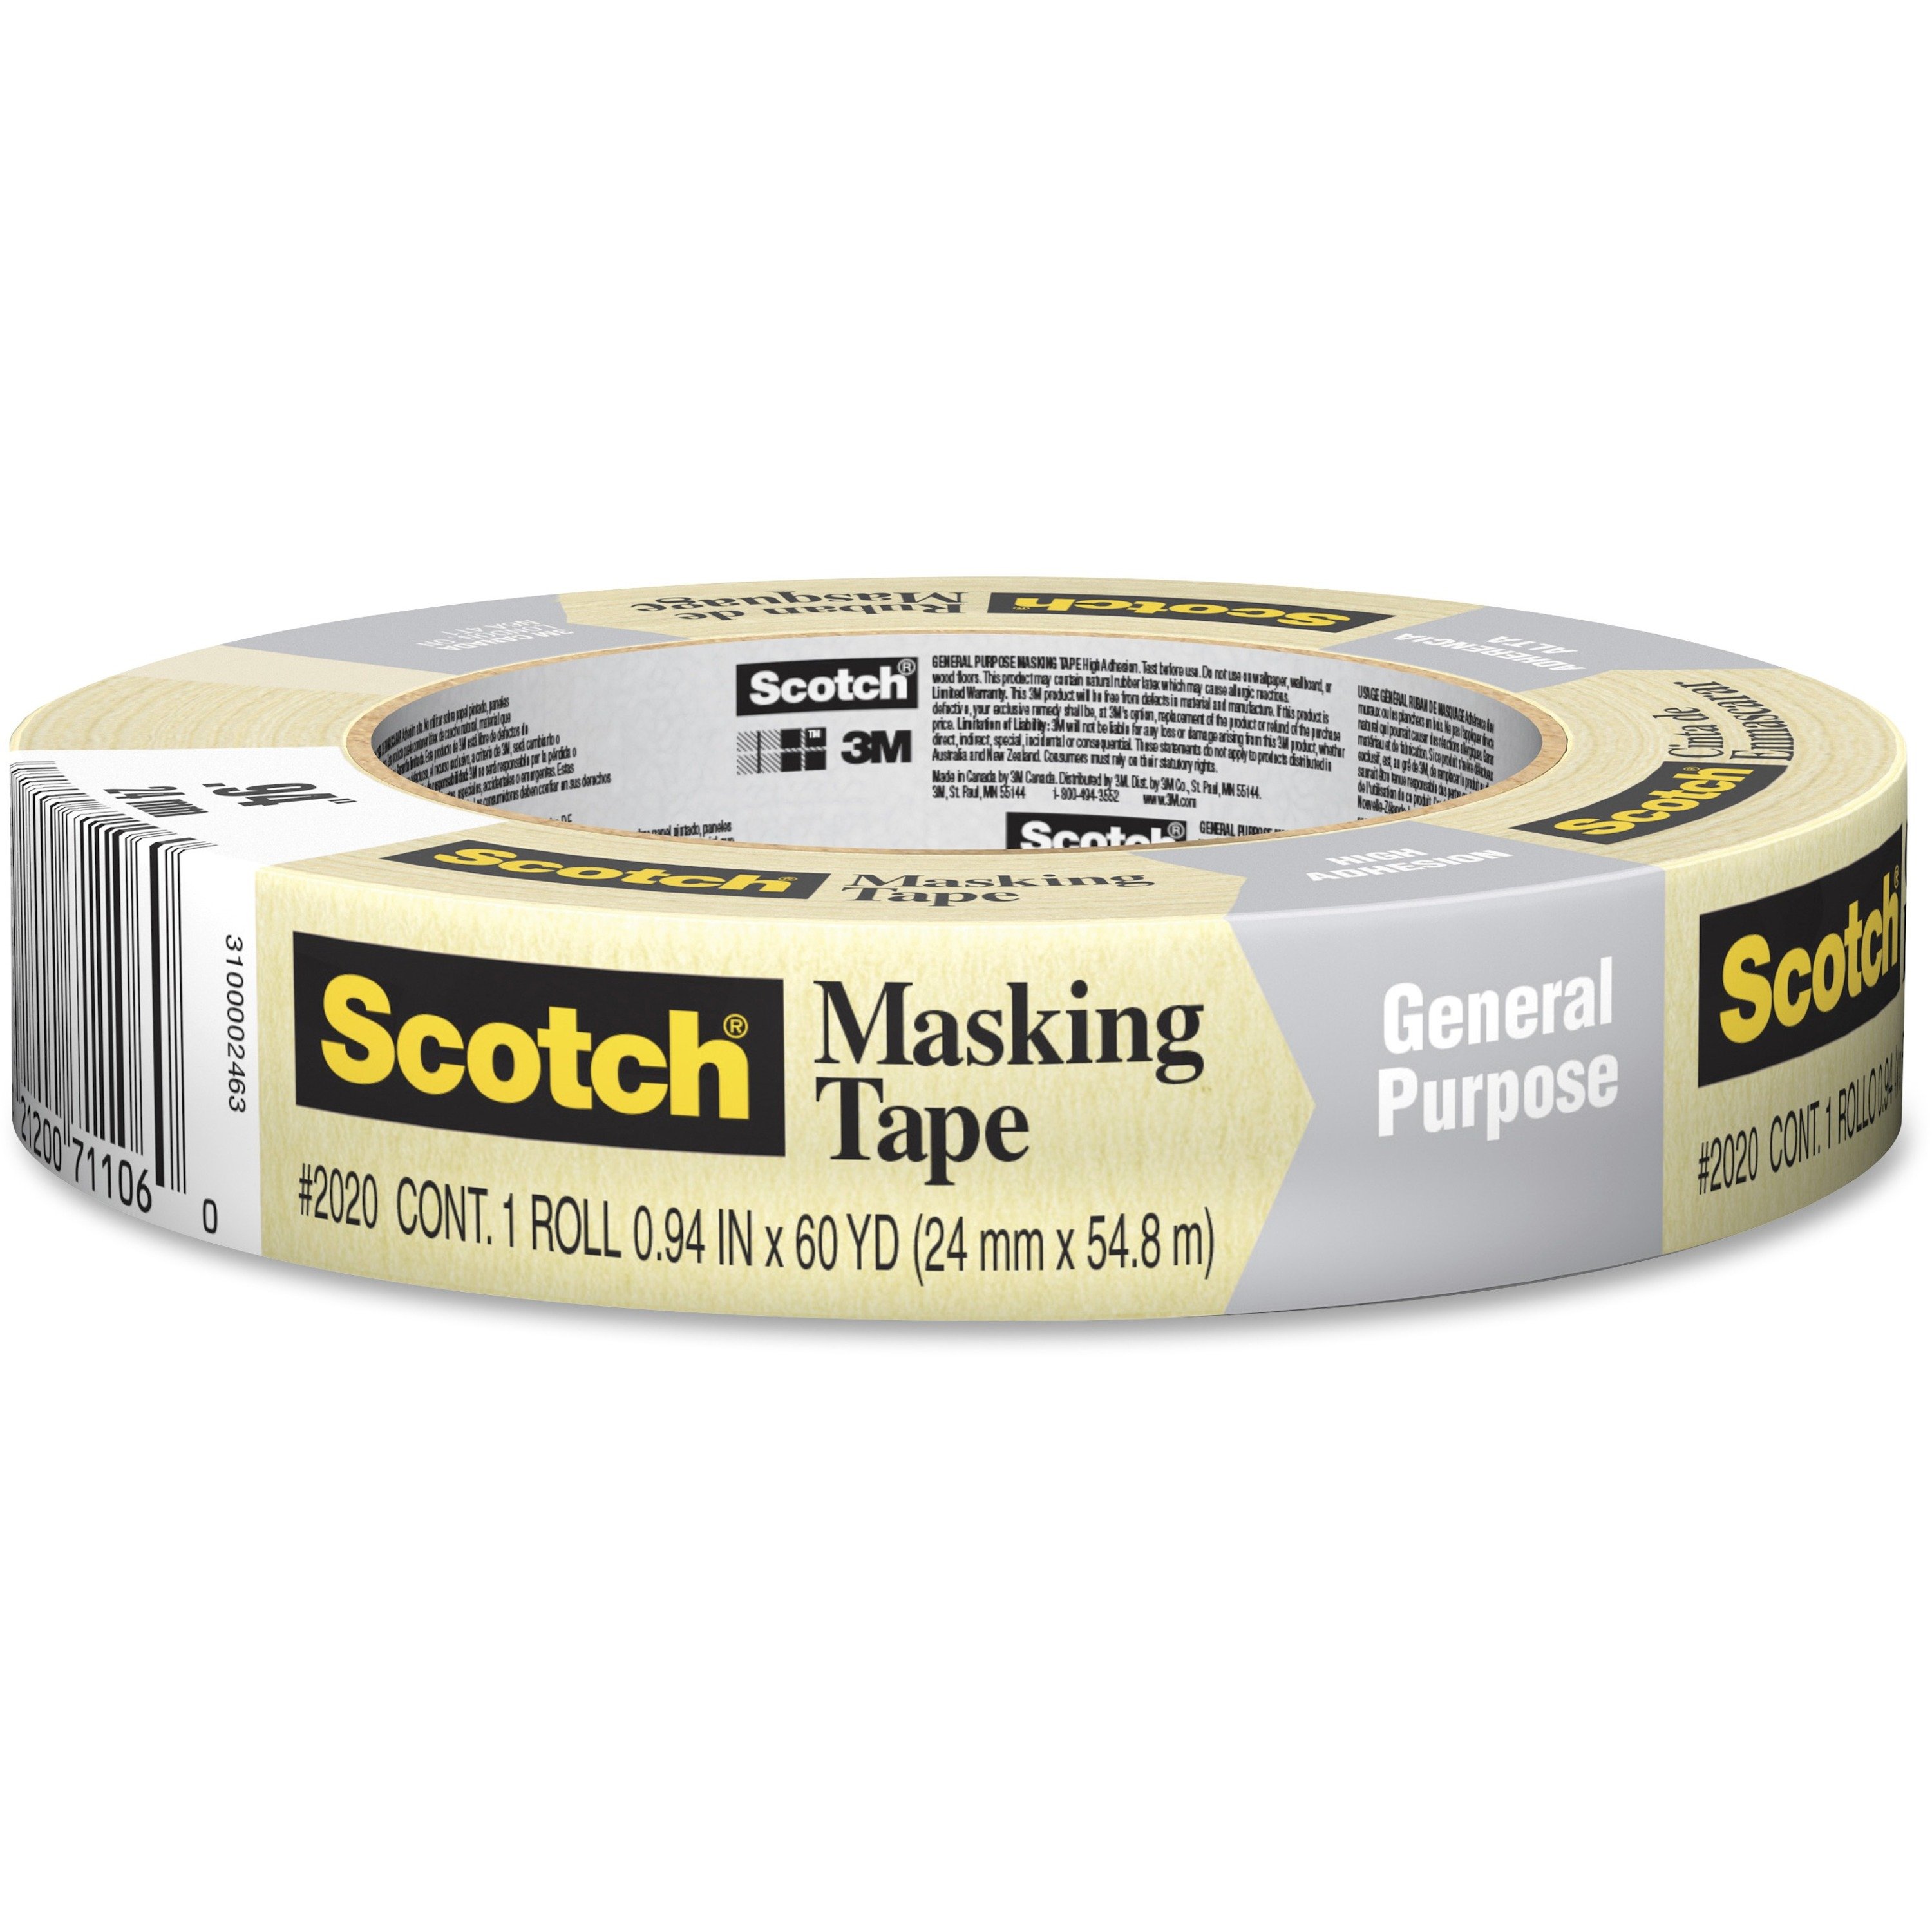 Scotch Masking Tape 2020, 24 mm x 55 m - Each